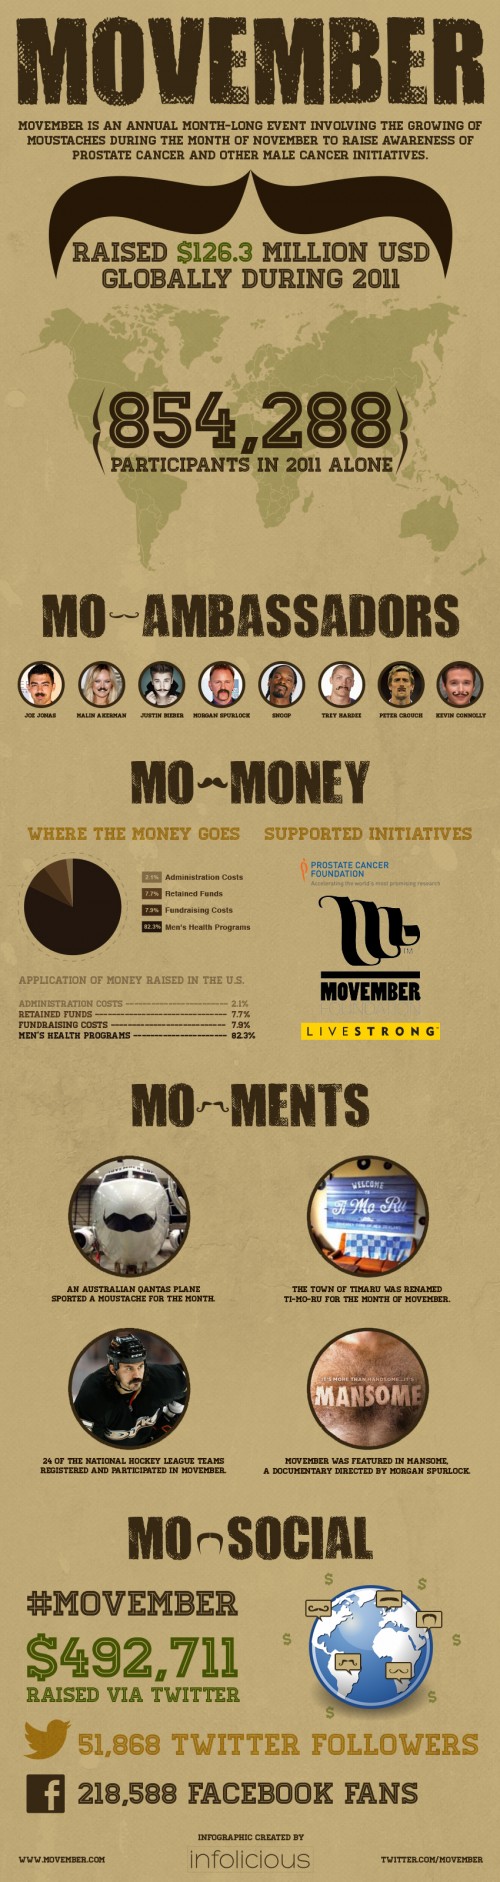 movember_infographic 2011